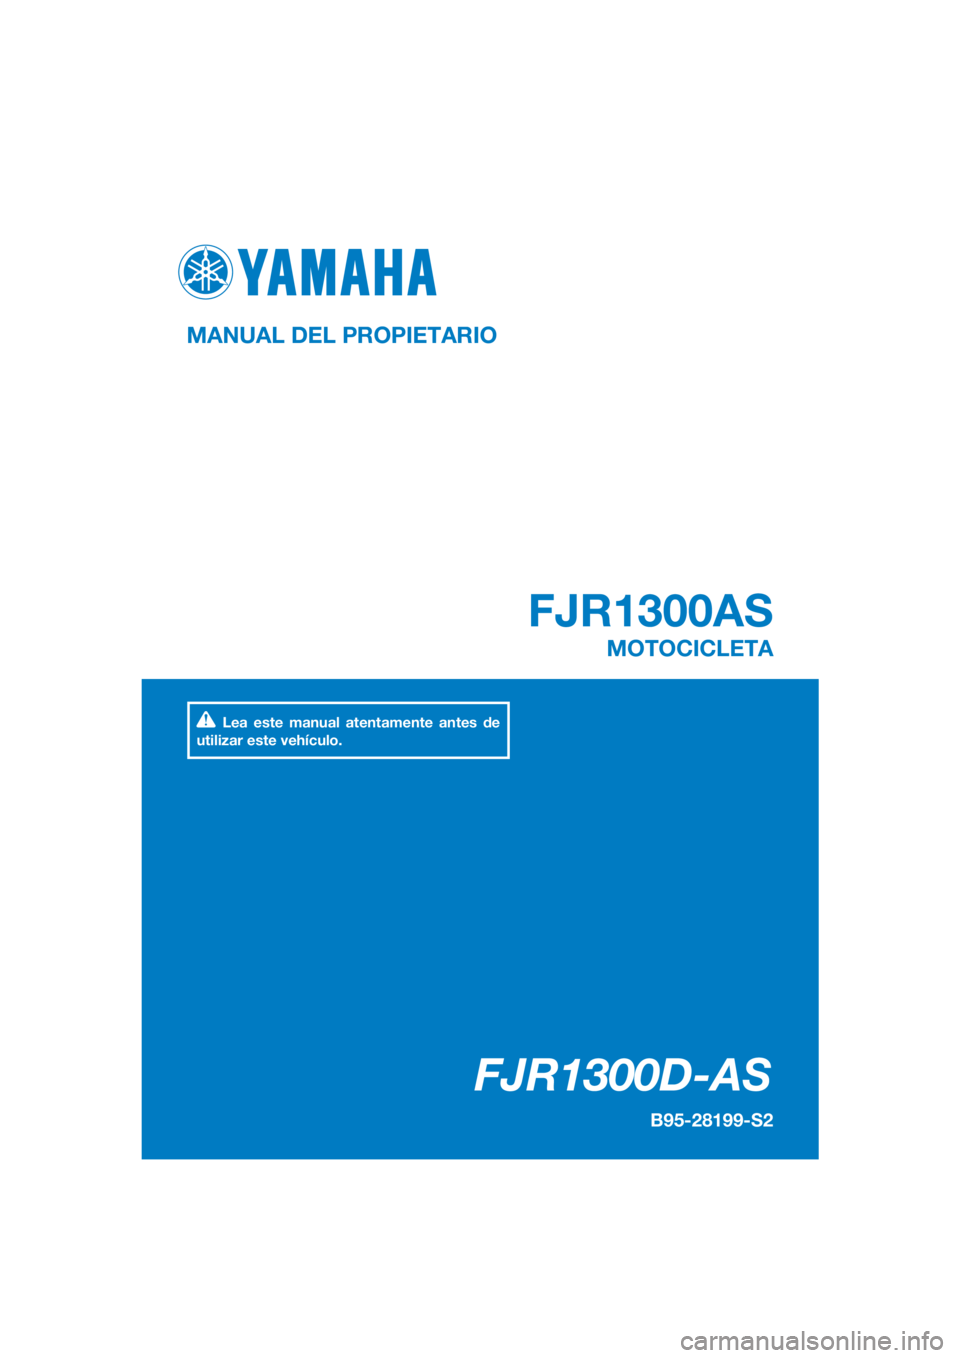 YAMAHA FJR1300AS 2020  Manuale de Empleo (in Spanish) 